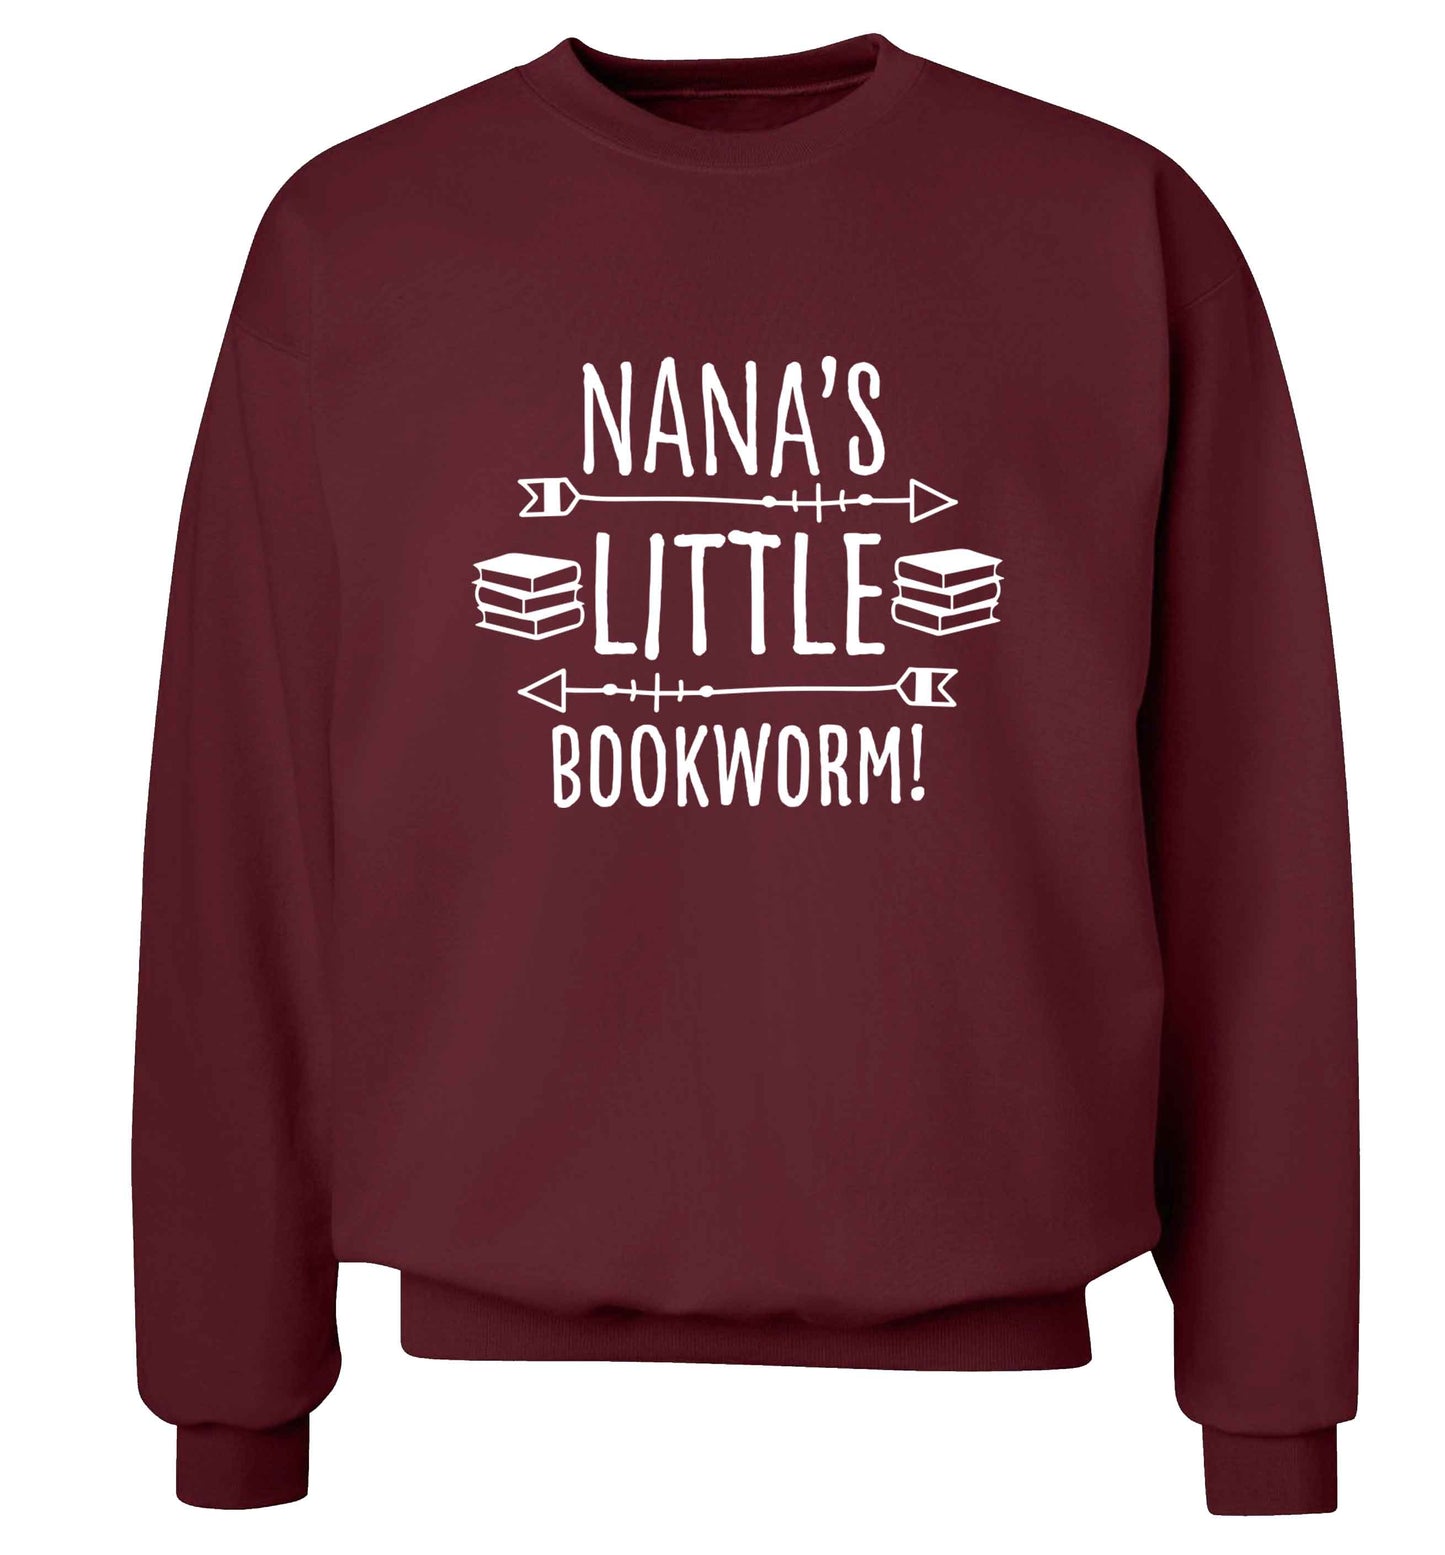 Nana's little bookworm adult's unisex maroon sweater 2XL